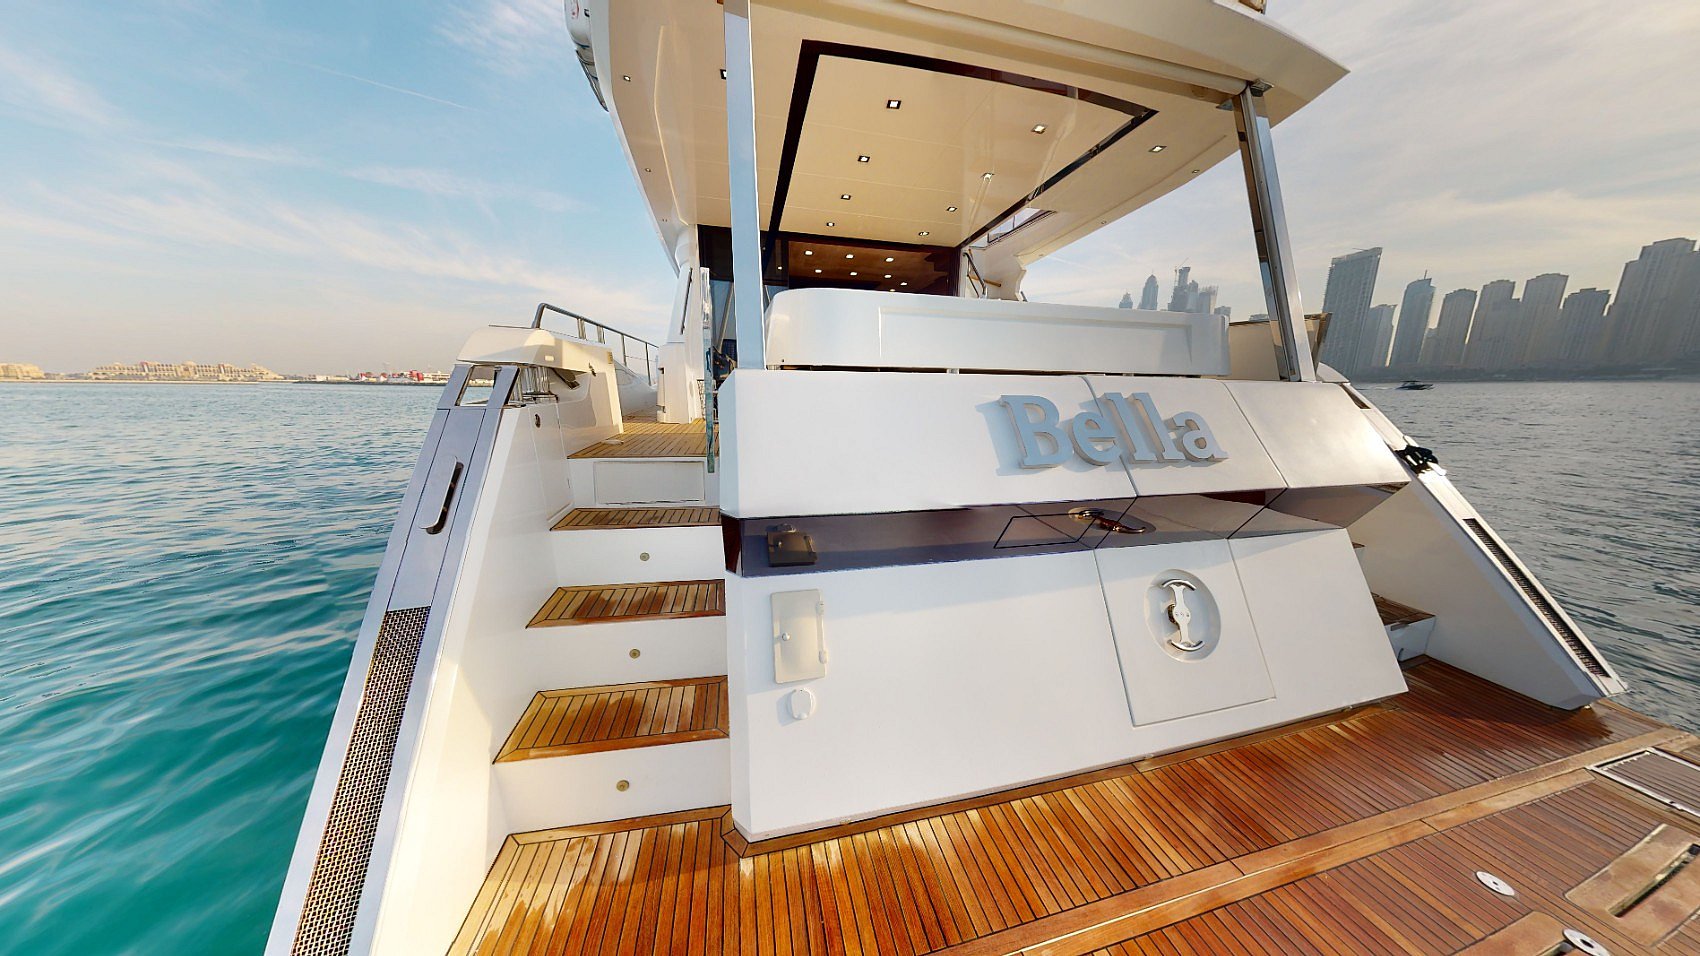 Power boat Galeon 78 ft in Dubai Harbour for rent in Dubai